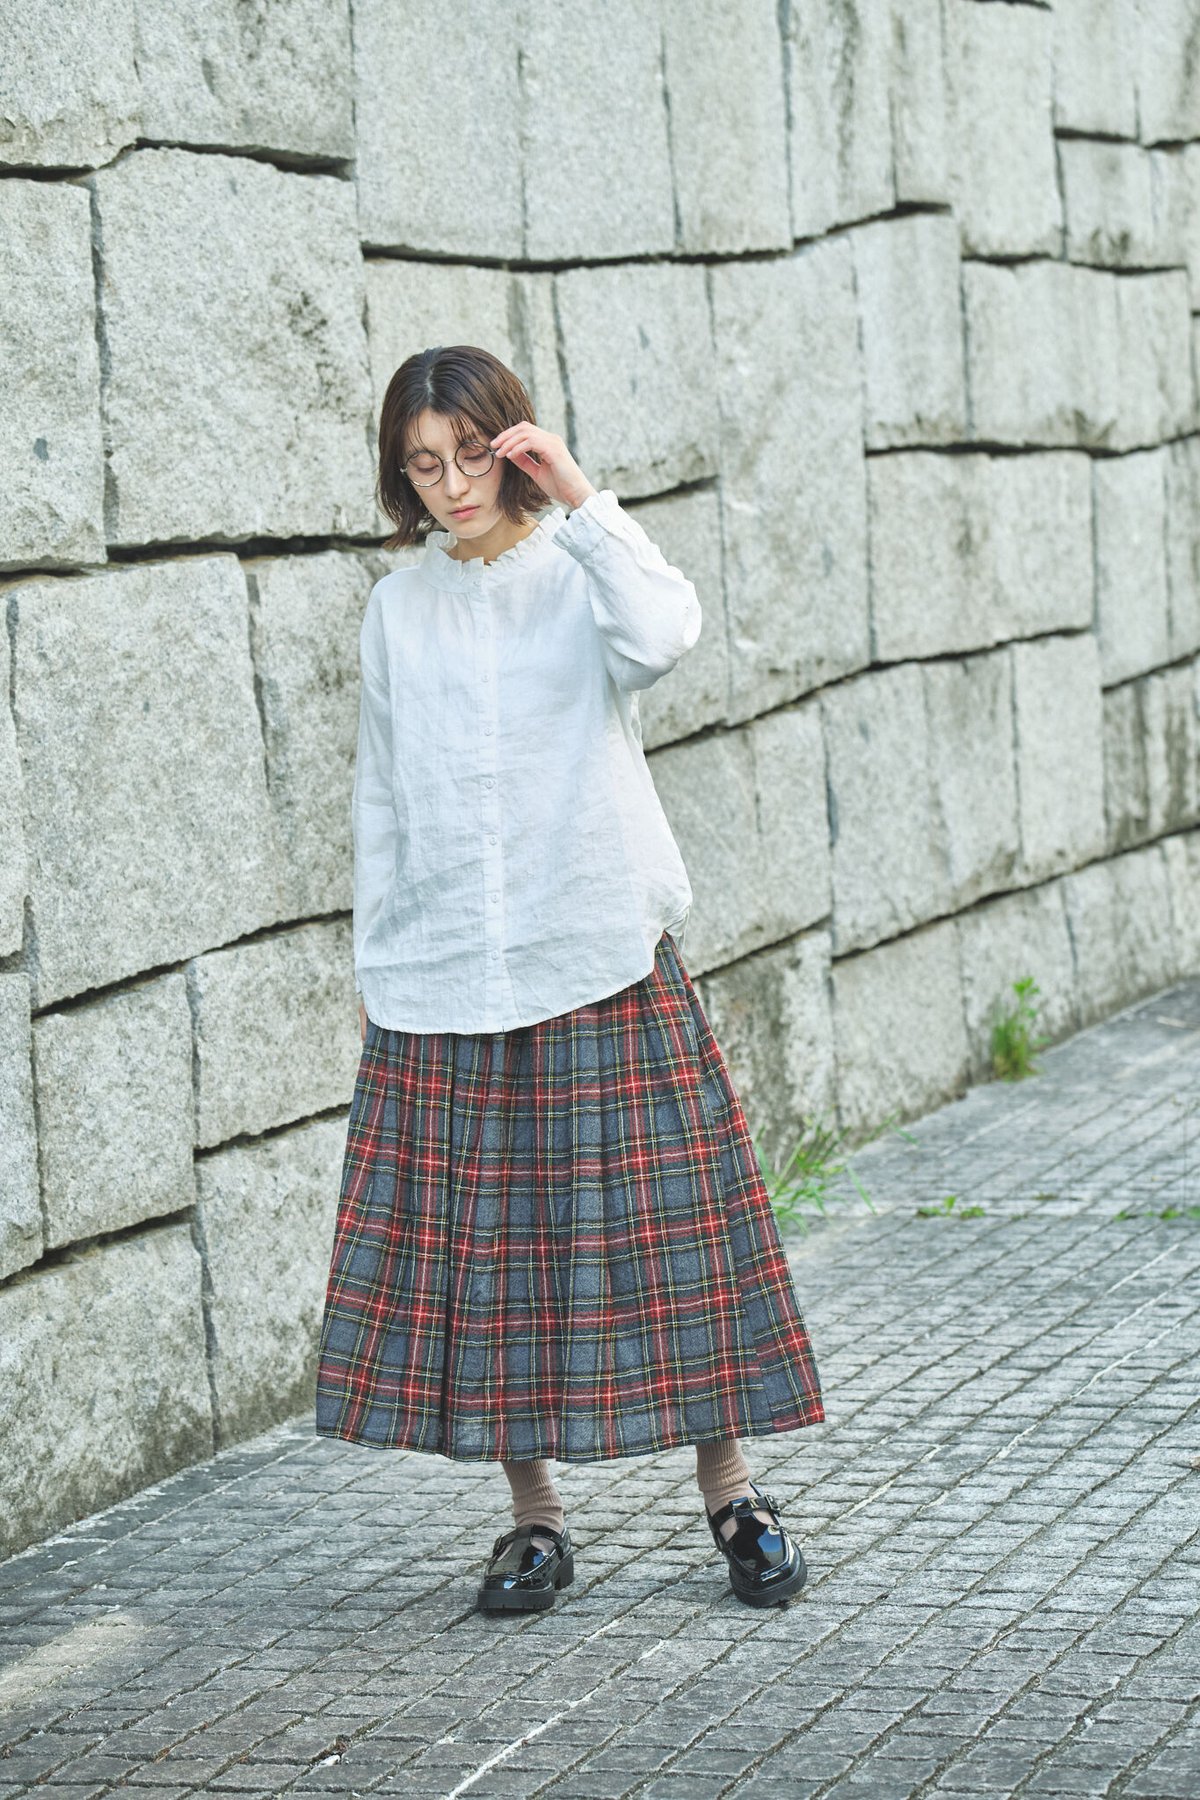 ubasoku ウバソク リネン 83cm丈 裏付 タック スカート